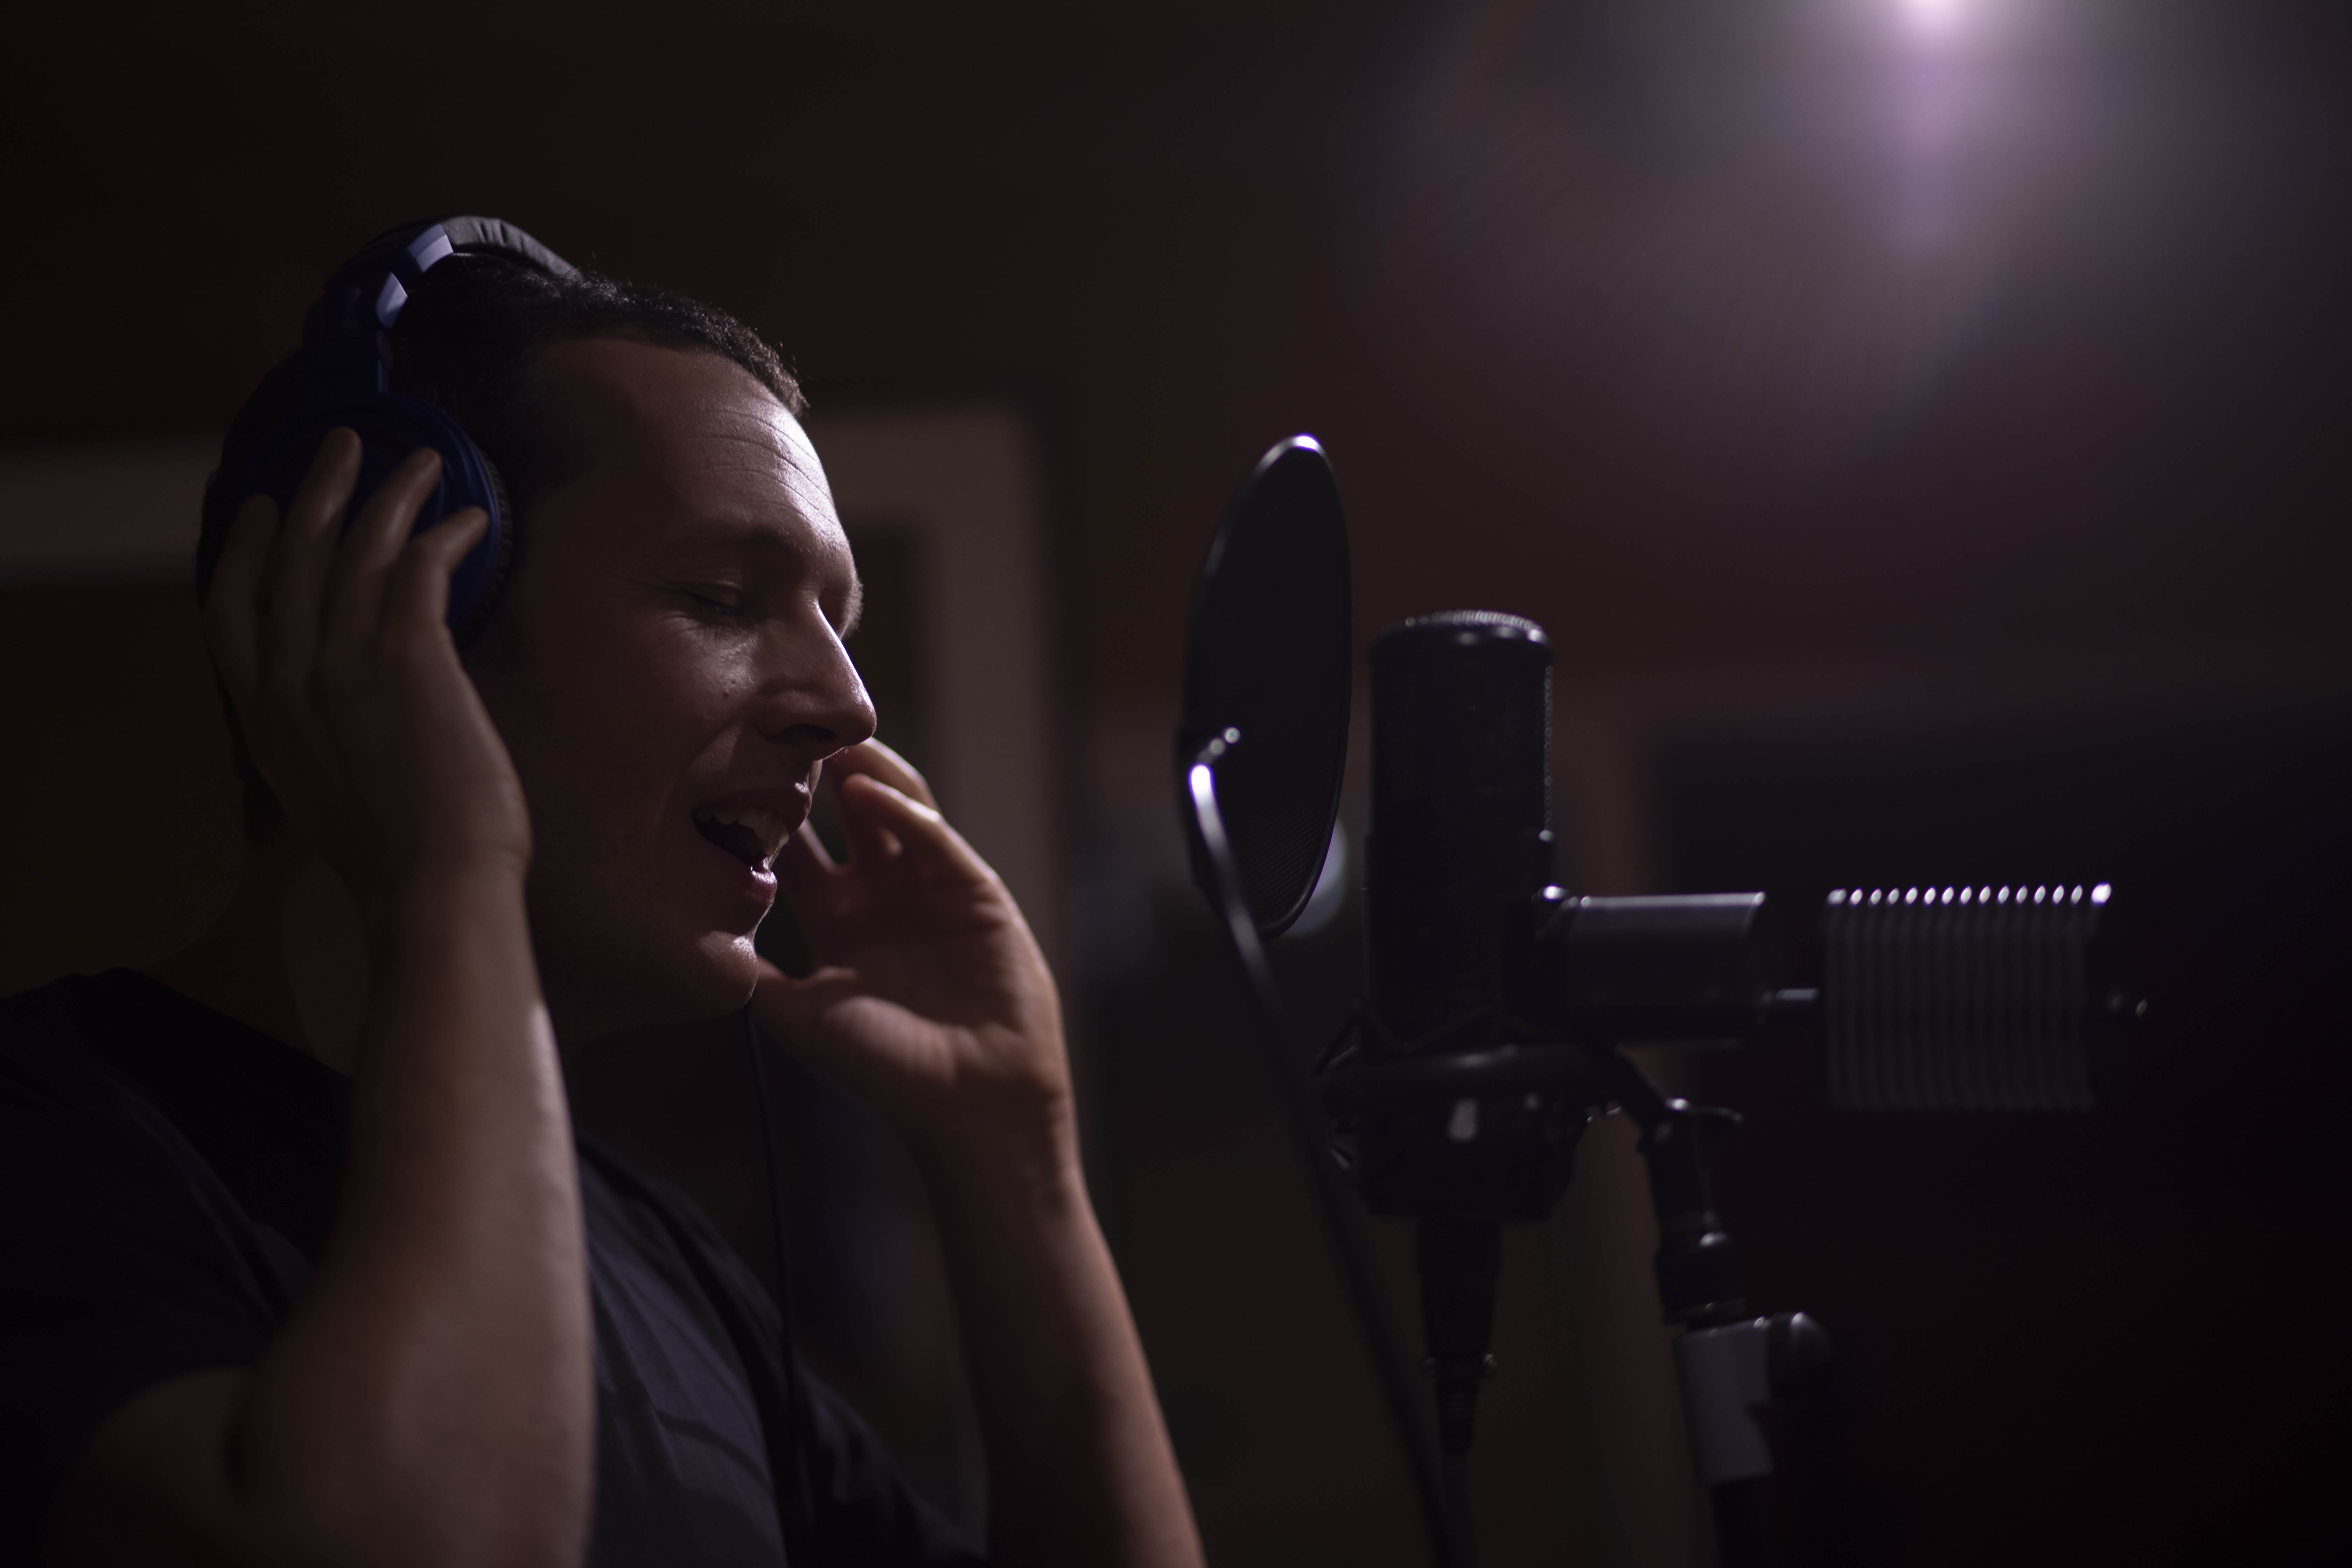 Pablo Pareja singing at a recording studio